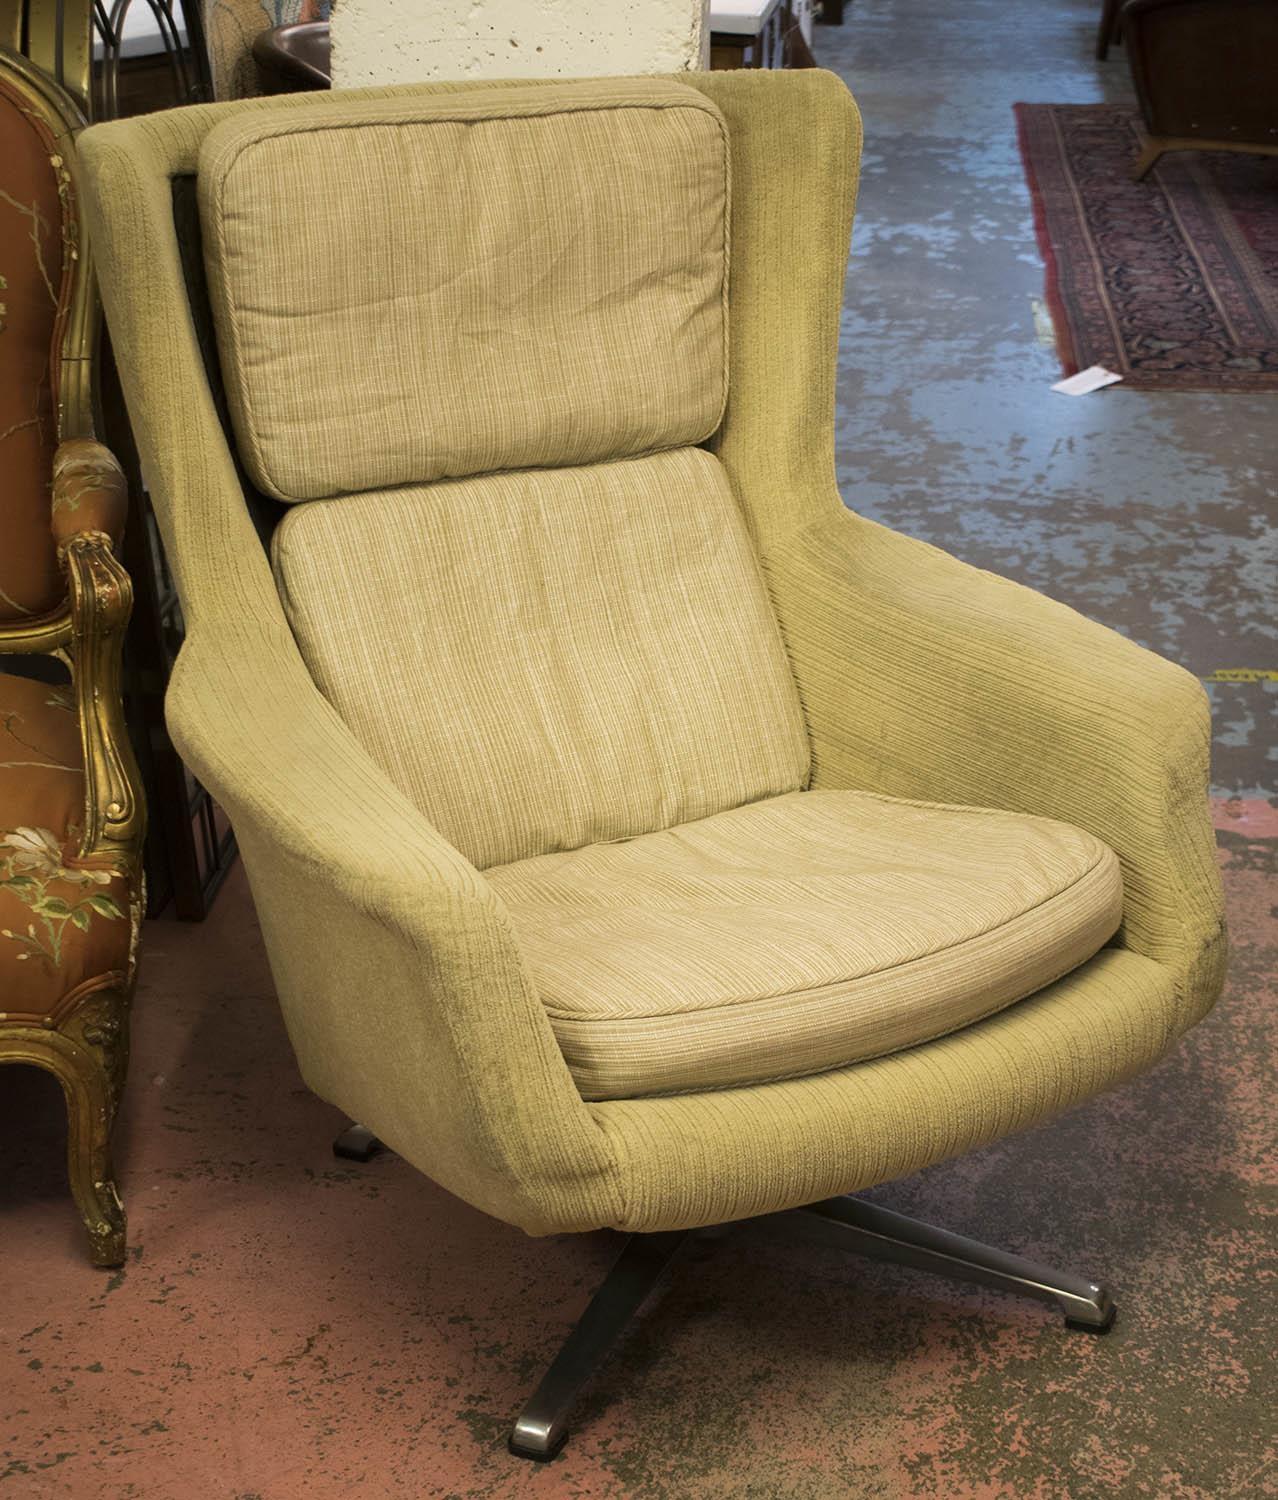 SWIVEL ARMCHAIR, mid 20th century Swedish in cord upholstery with cream cushions on an aluminium